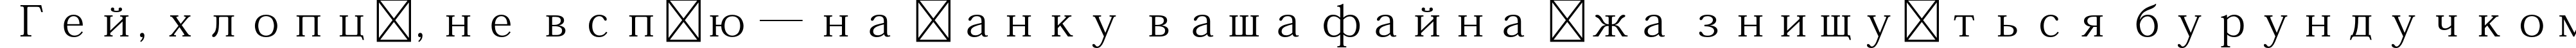 Пример написания шрифтом Adobe Kaiti Std R текста на украинском